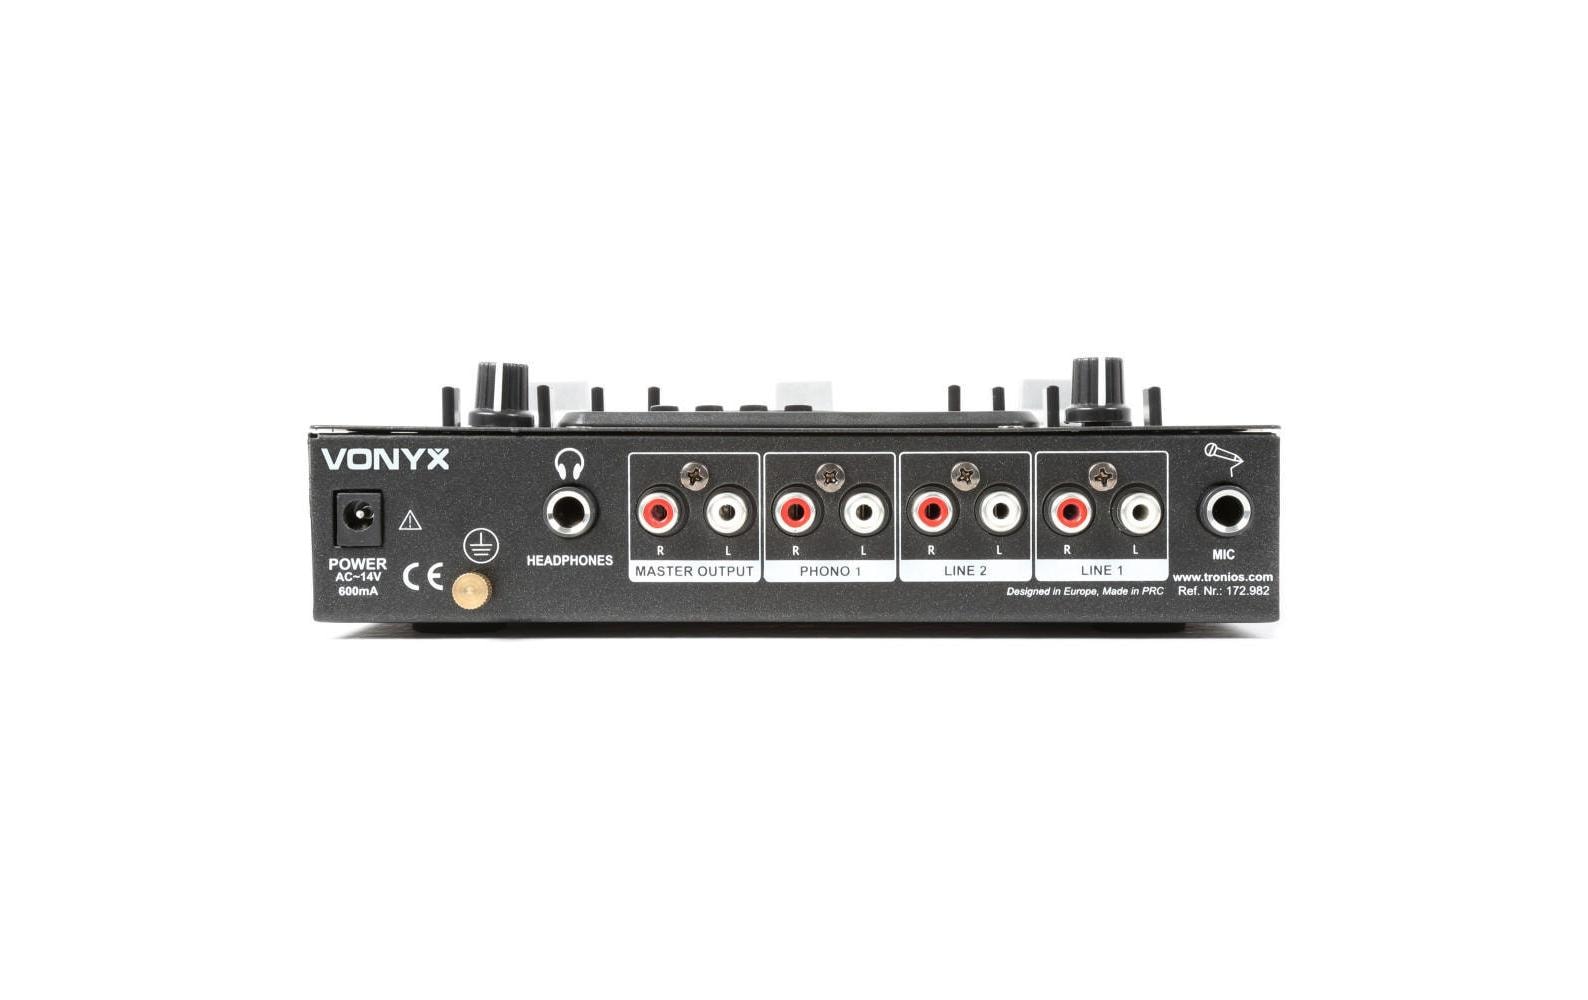 Vonyx DJ-Mixer STM2270